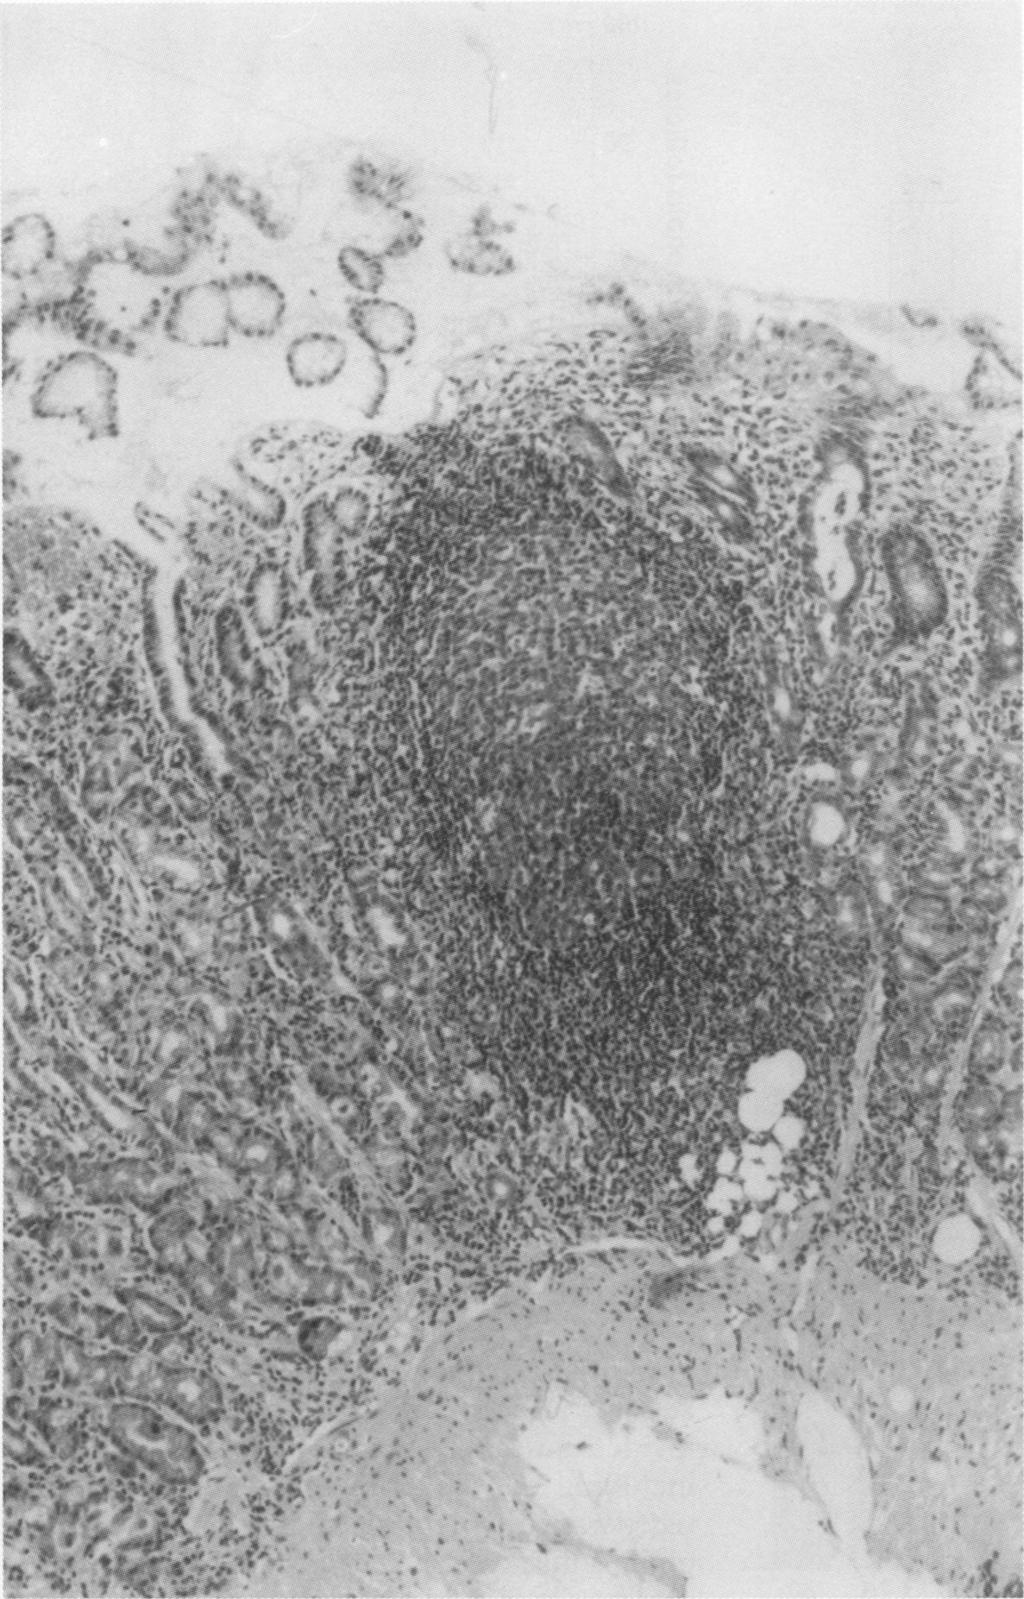 Lymphoid follicles in H pylori gastitis 4. 4.i,.1. '.,",.1- - '.....4 "I., I on Figure 3 Secondary lymphoid follicle in a biopsy specimen with H pylori associated gastritis (haematoxylin and eosin).